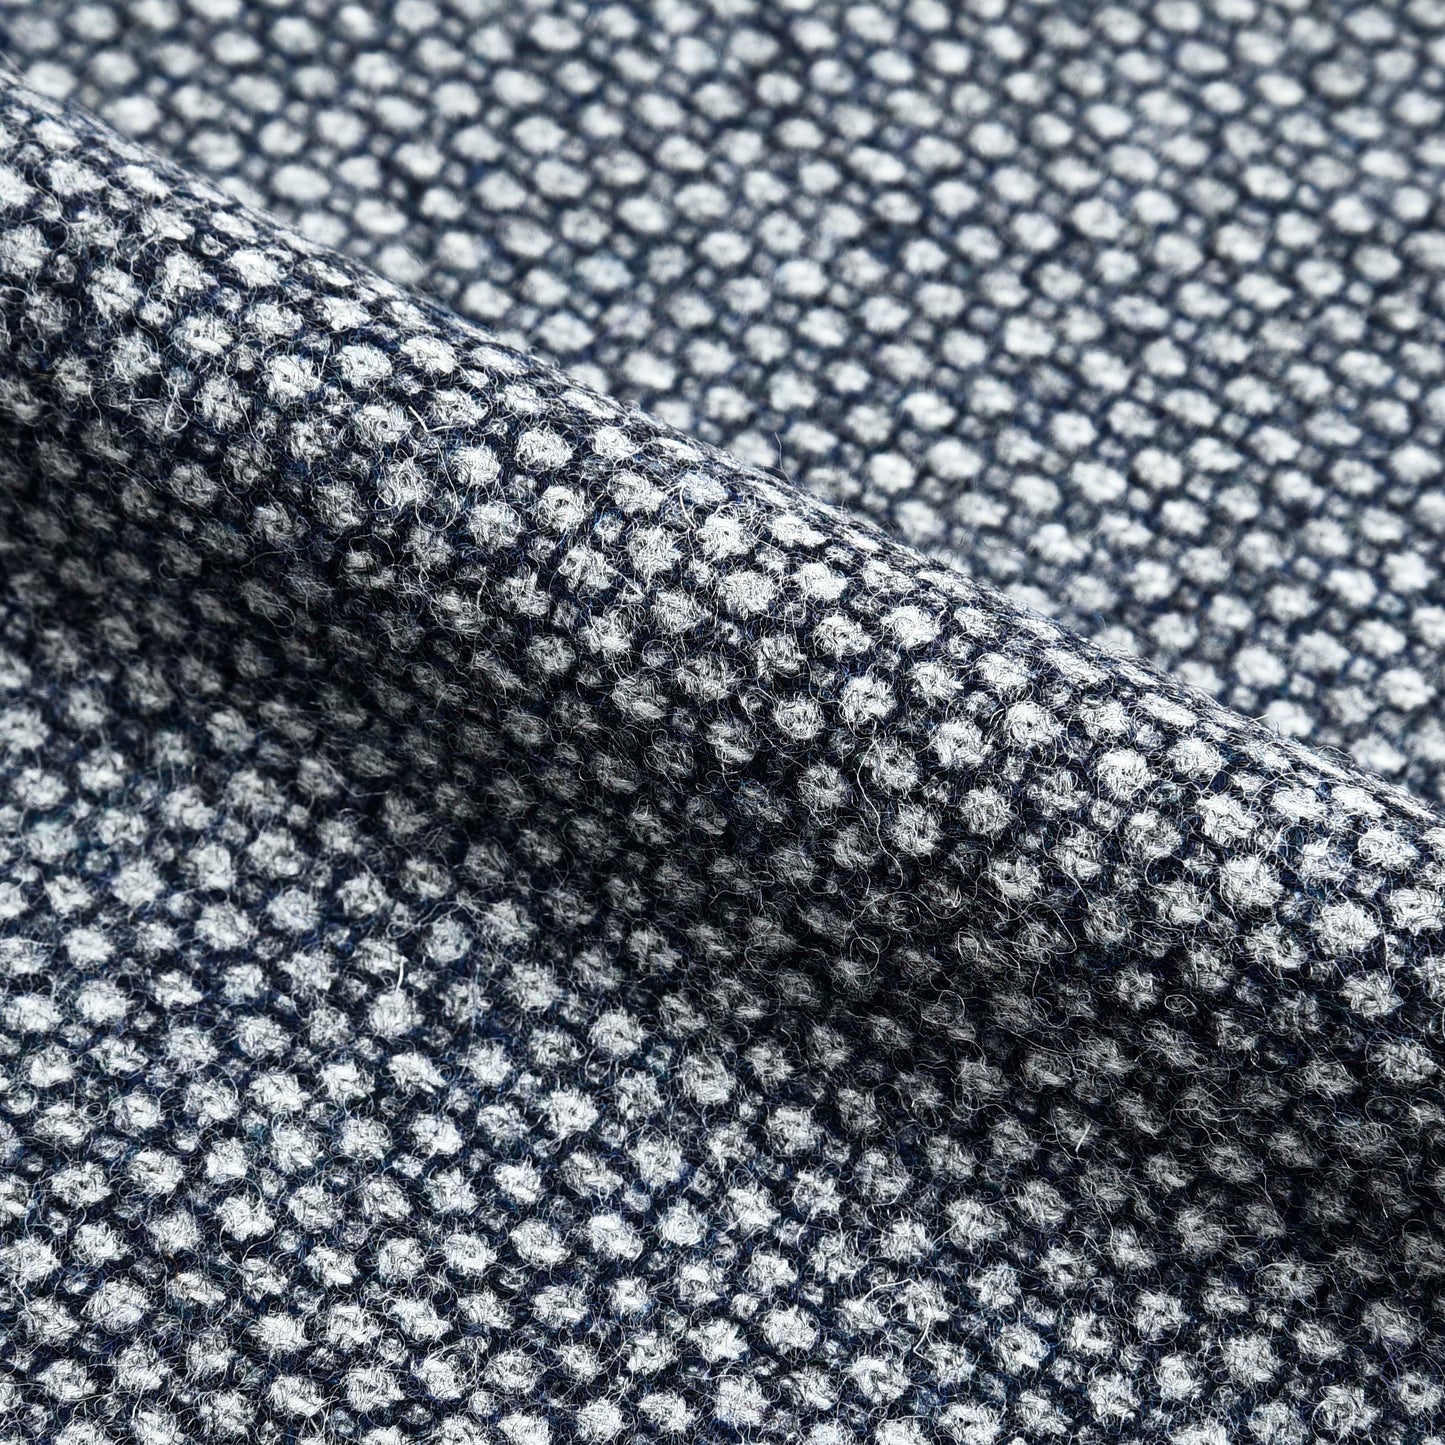 Dugdale Light Grey & Blue Tweed  Double Breasted Jacket